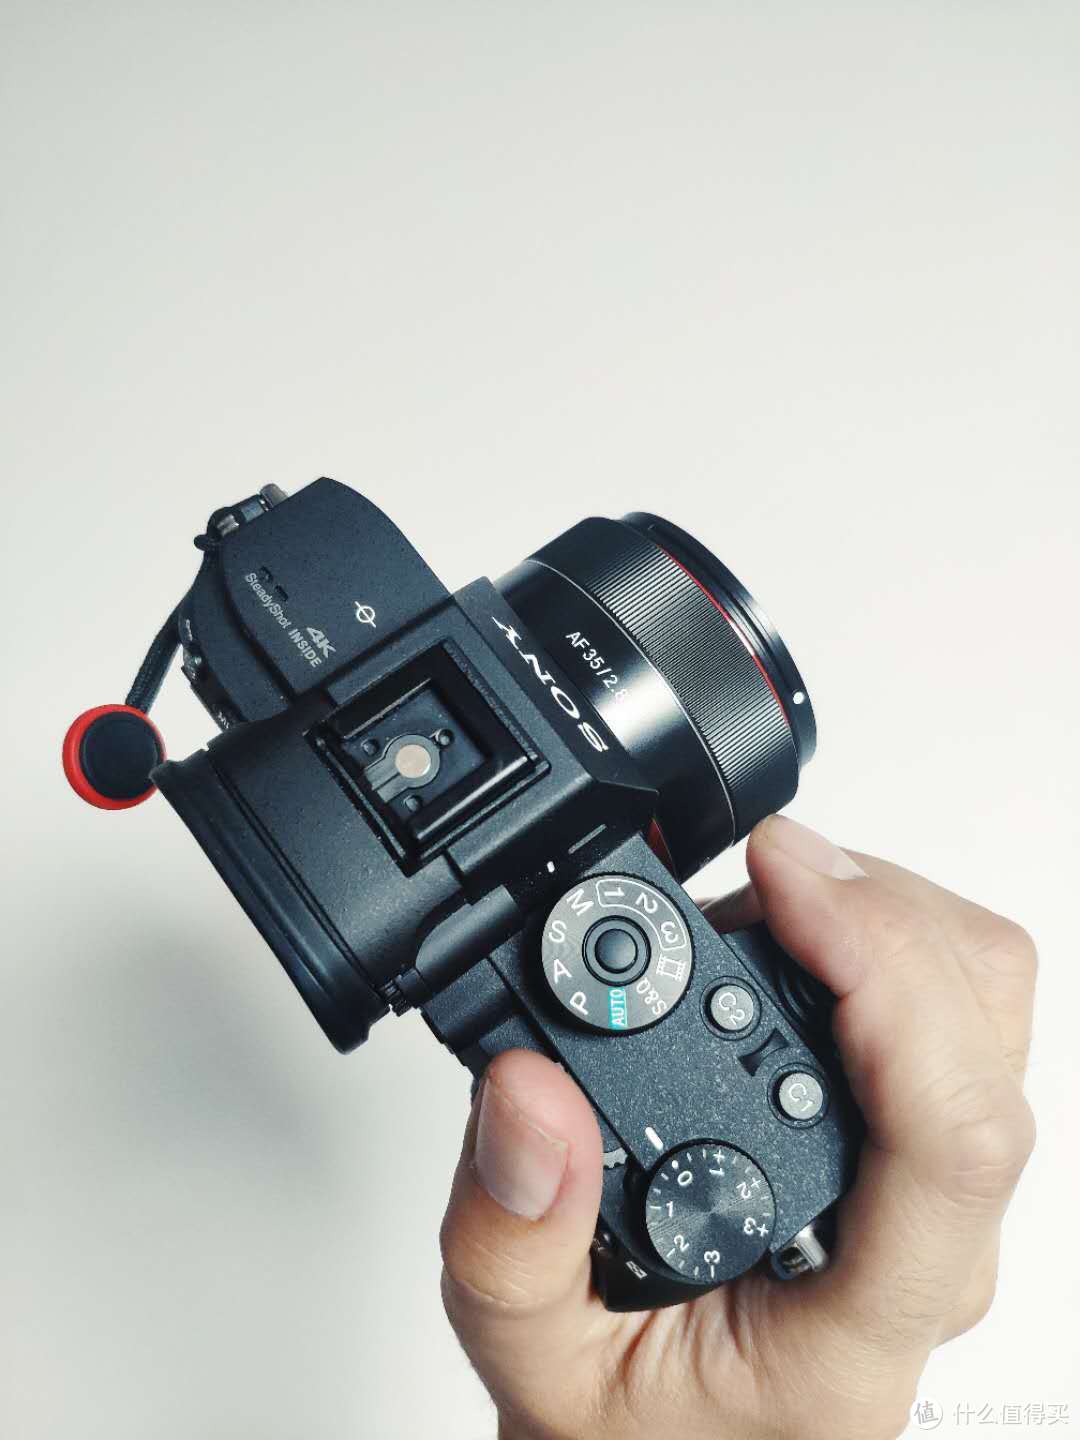 带个镜头盖去拍照—Samyang 35mm f2.8